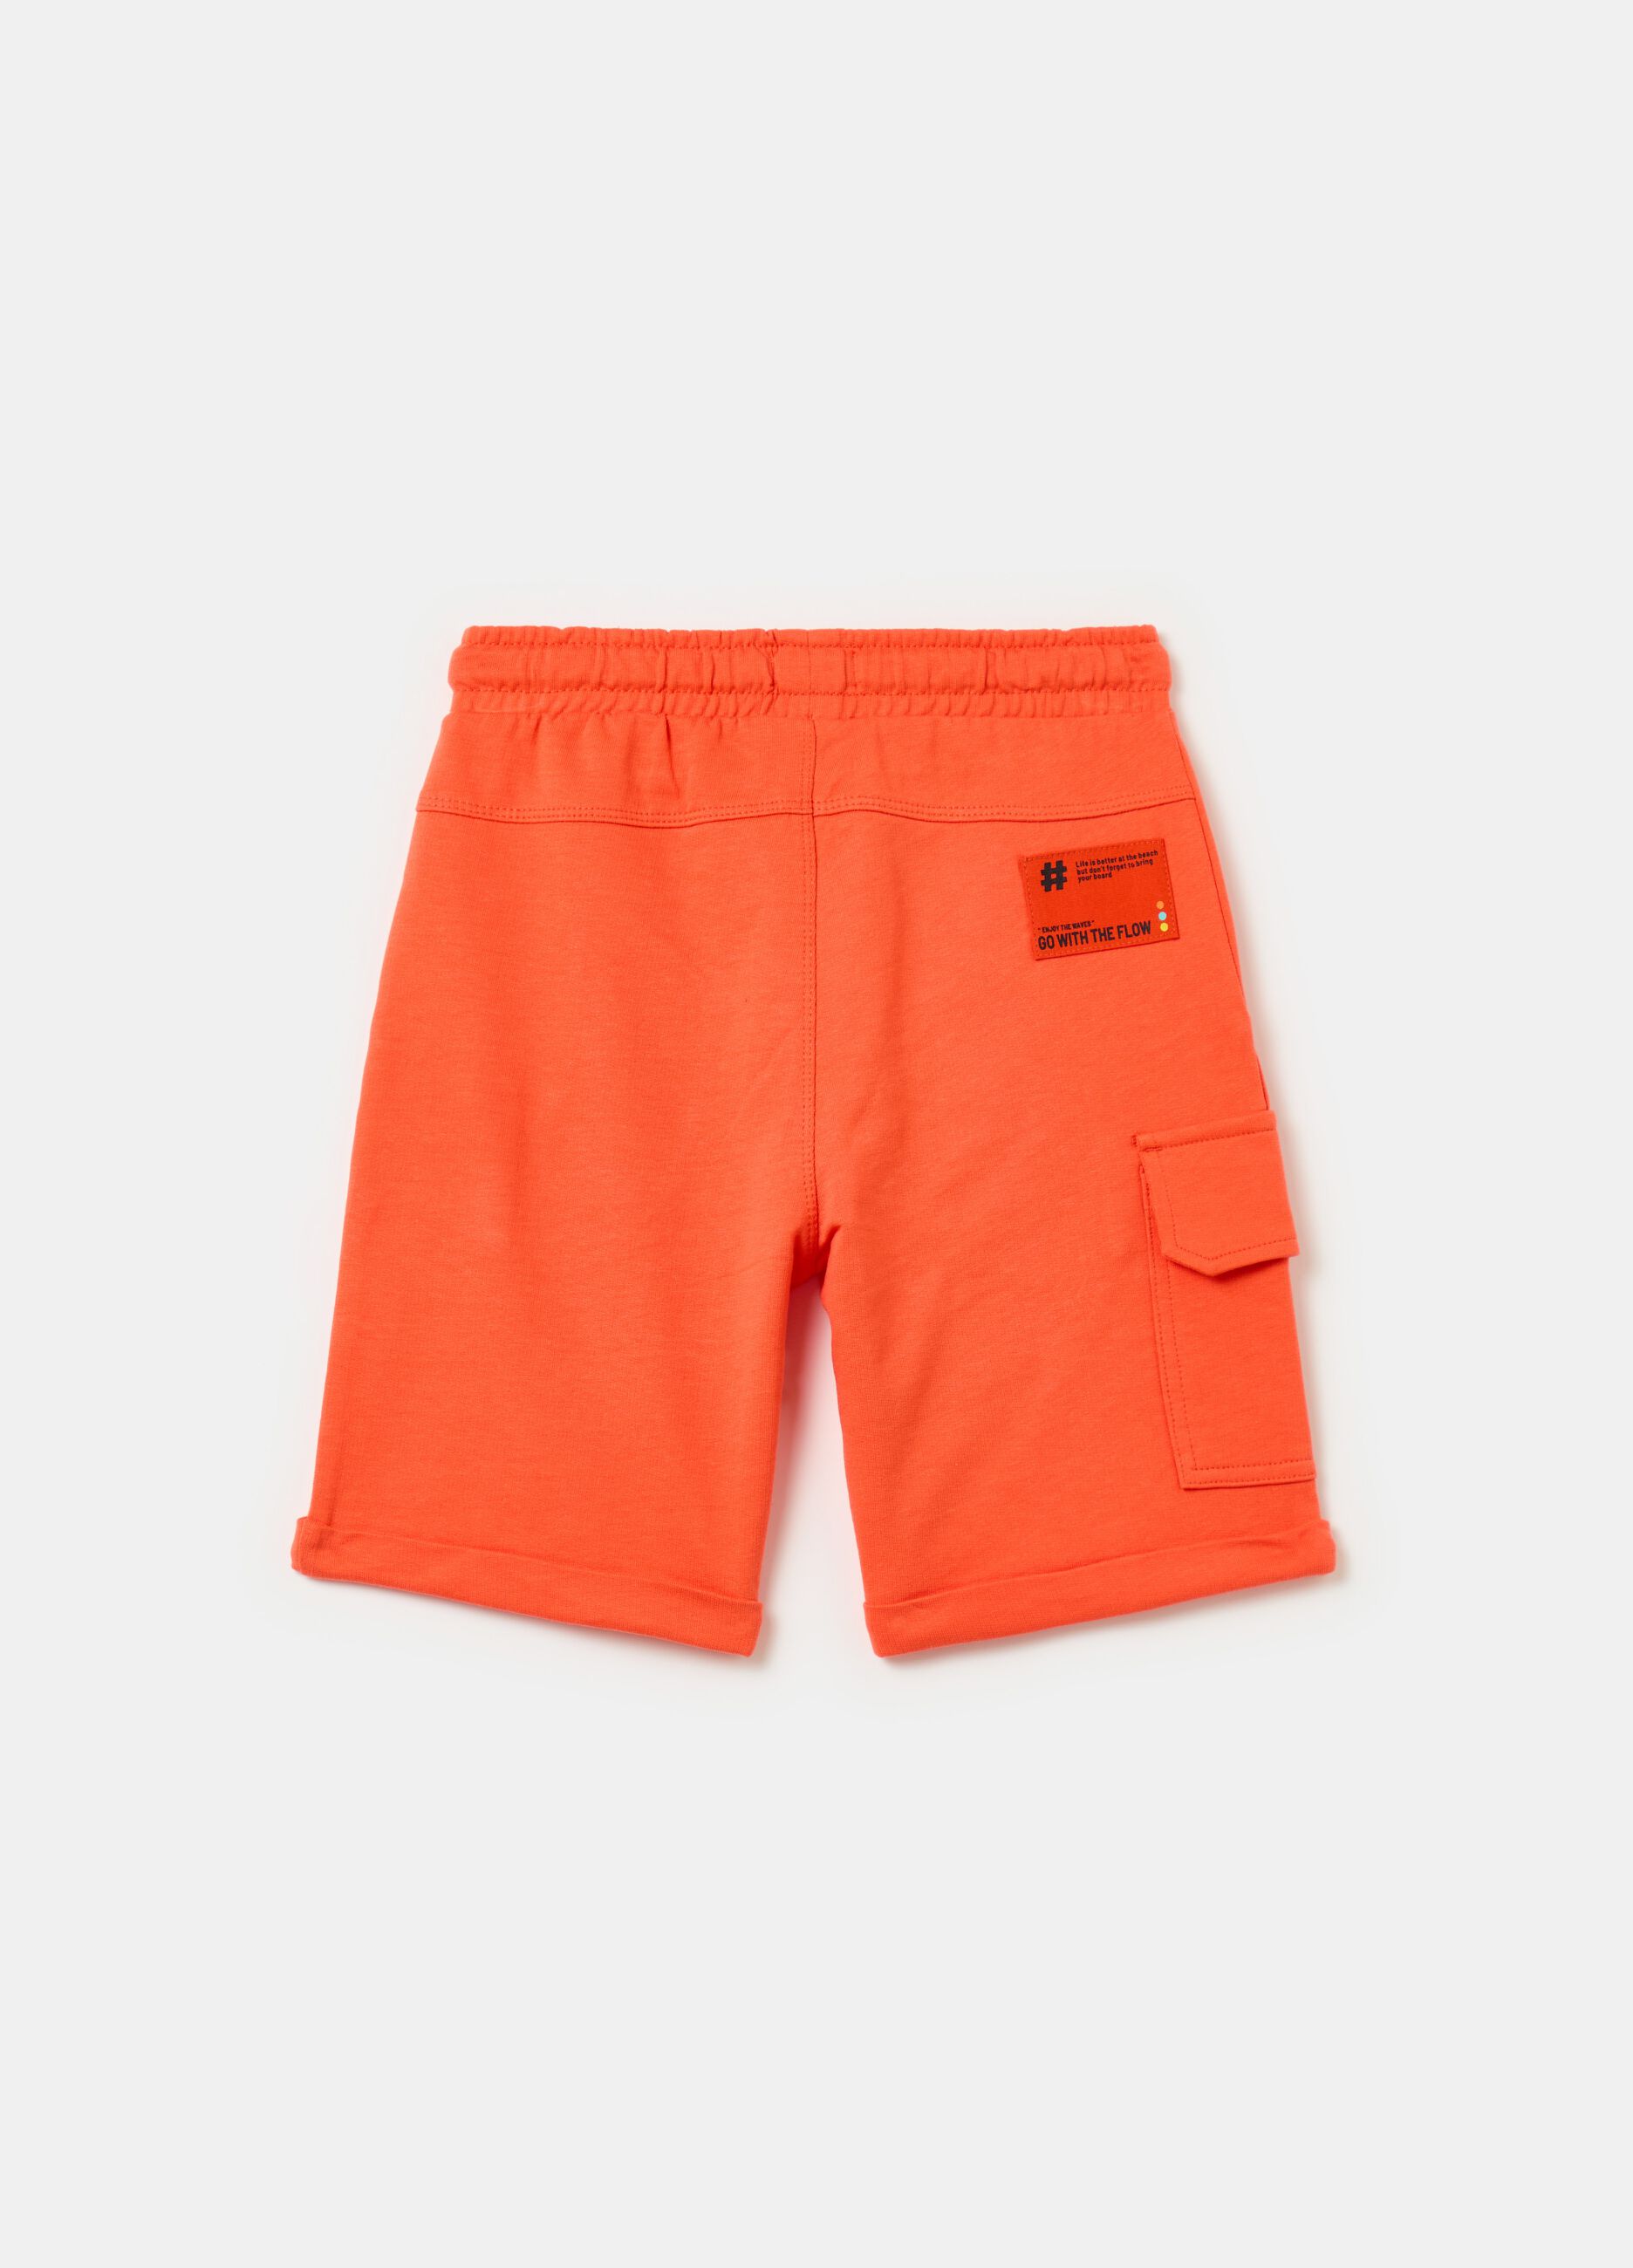 Fleece Bermuda shorts with drawstring and pockets